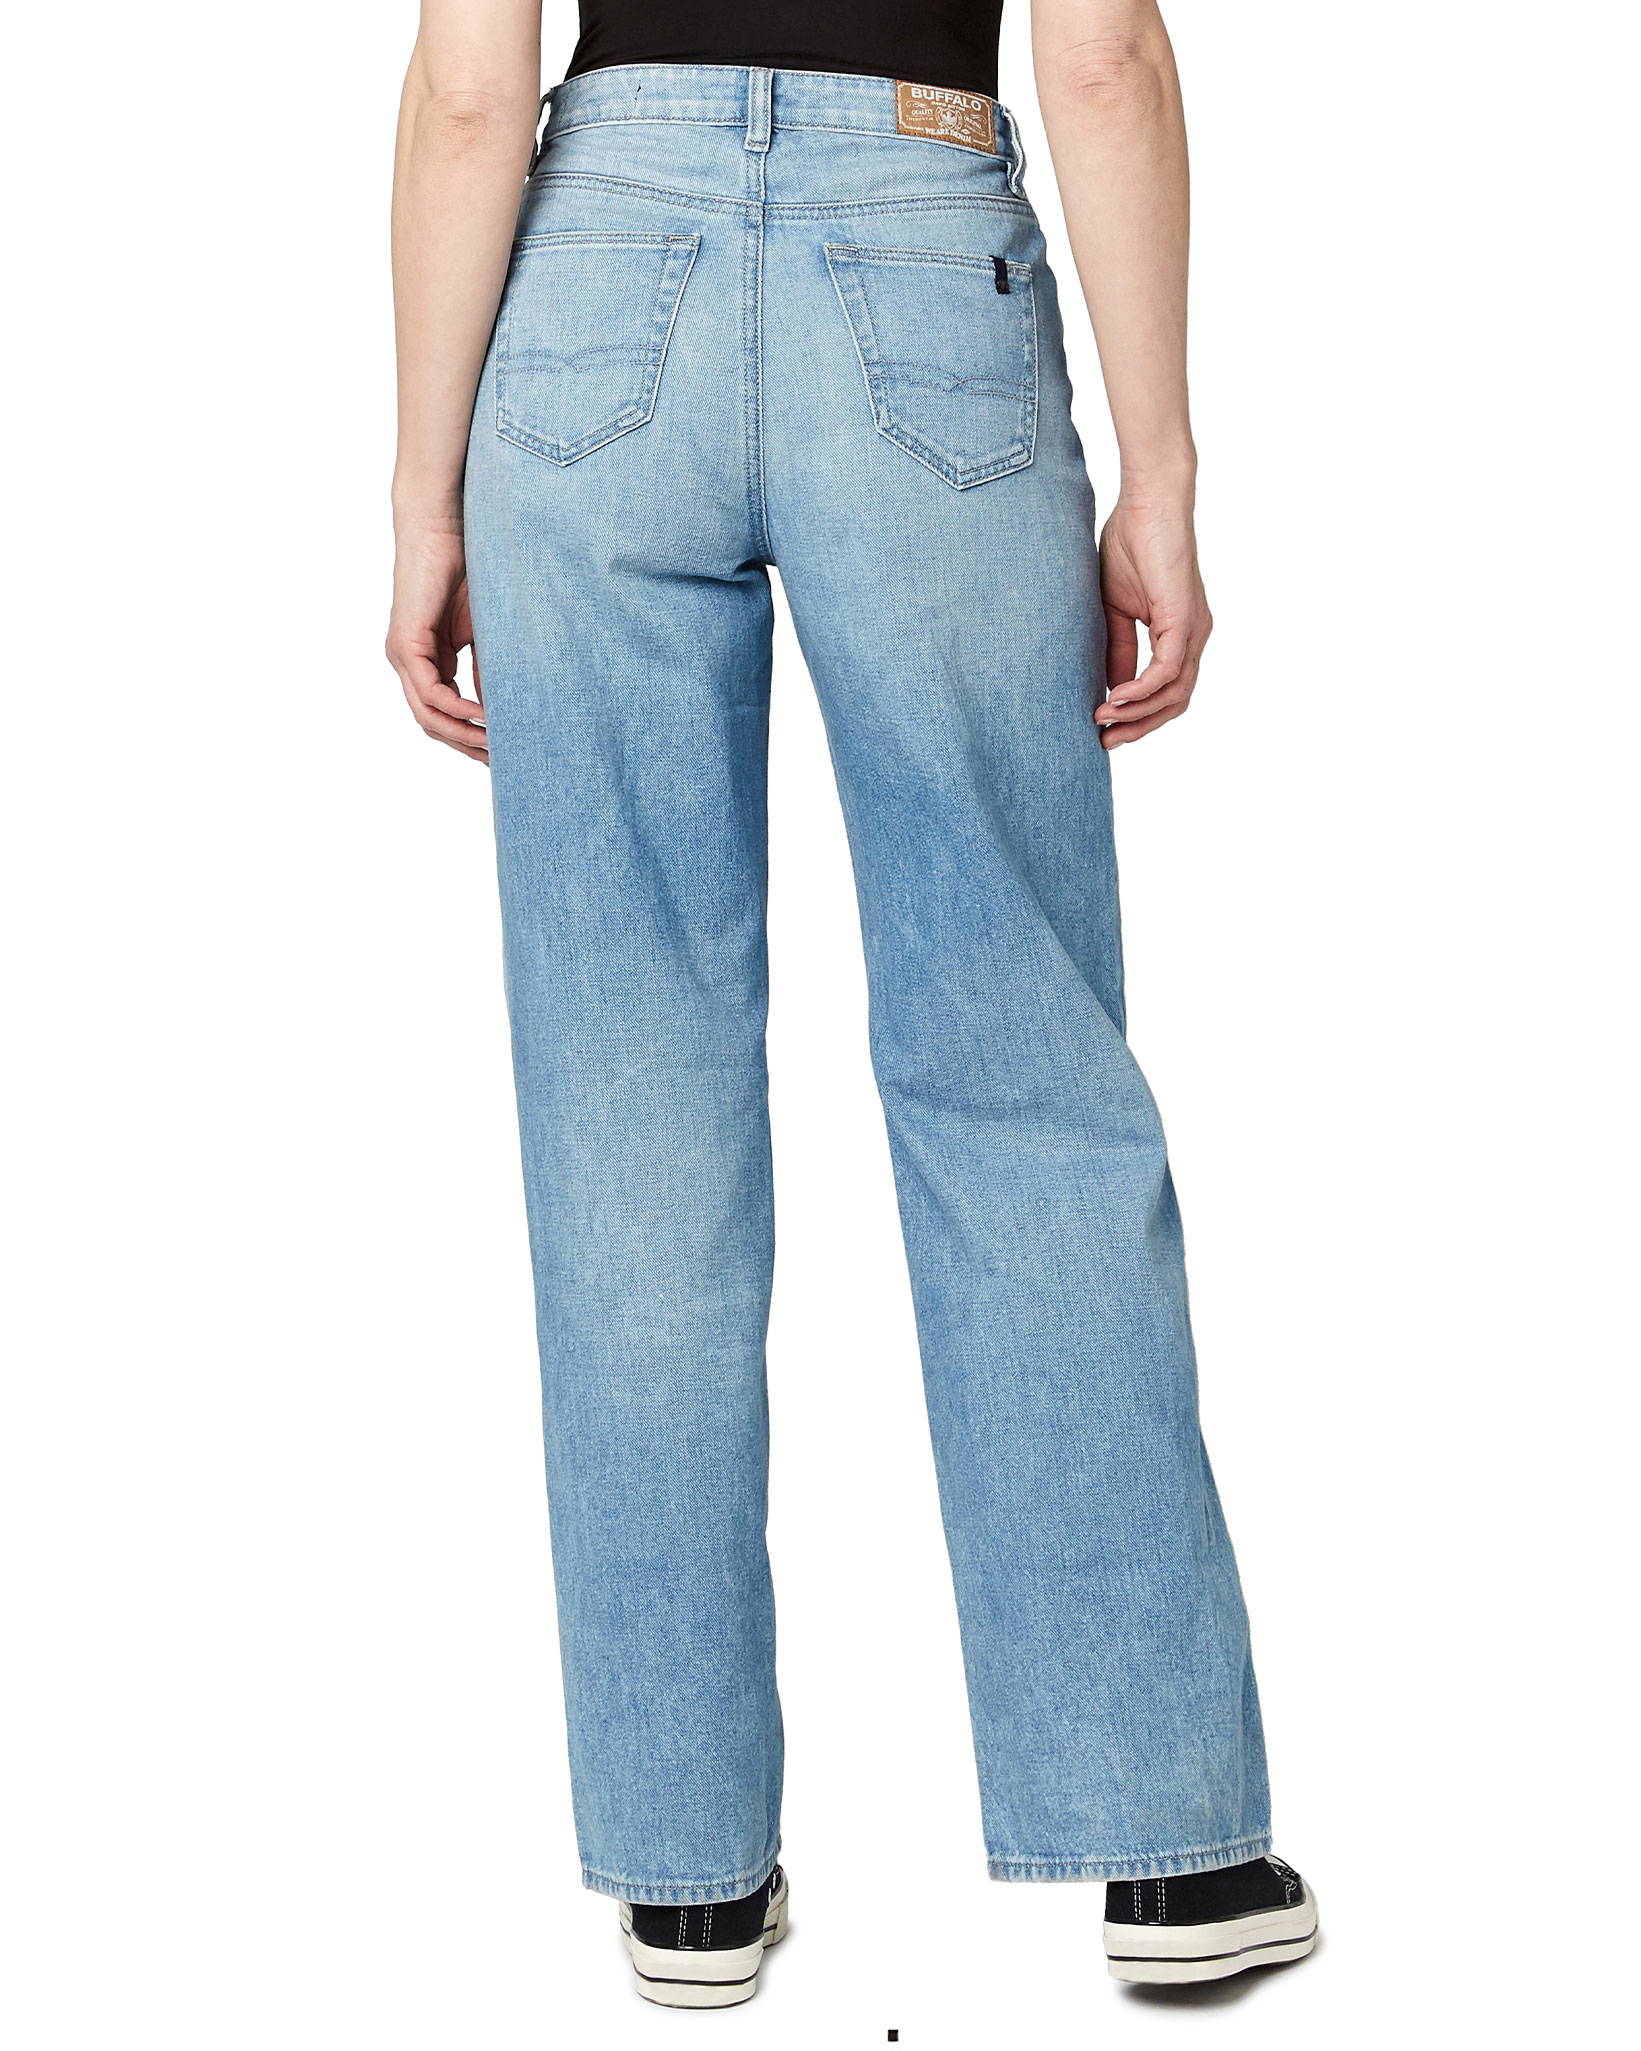 Buffalo David Bitton Ladies' High-Rise Skinny Jean, Dark Blue, 8/29 at   Women's Jeans store